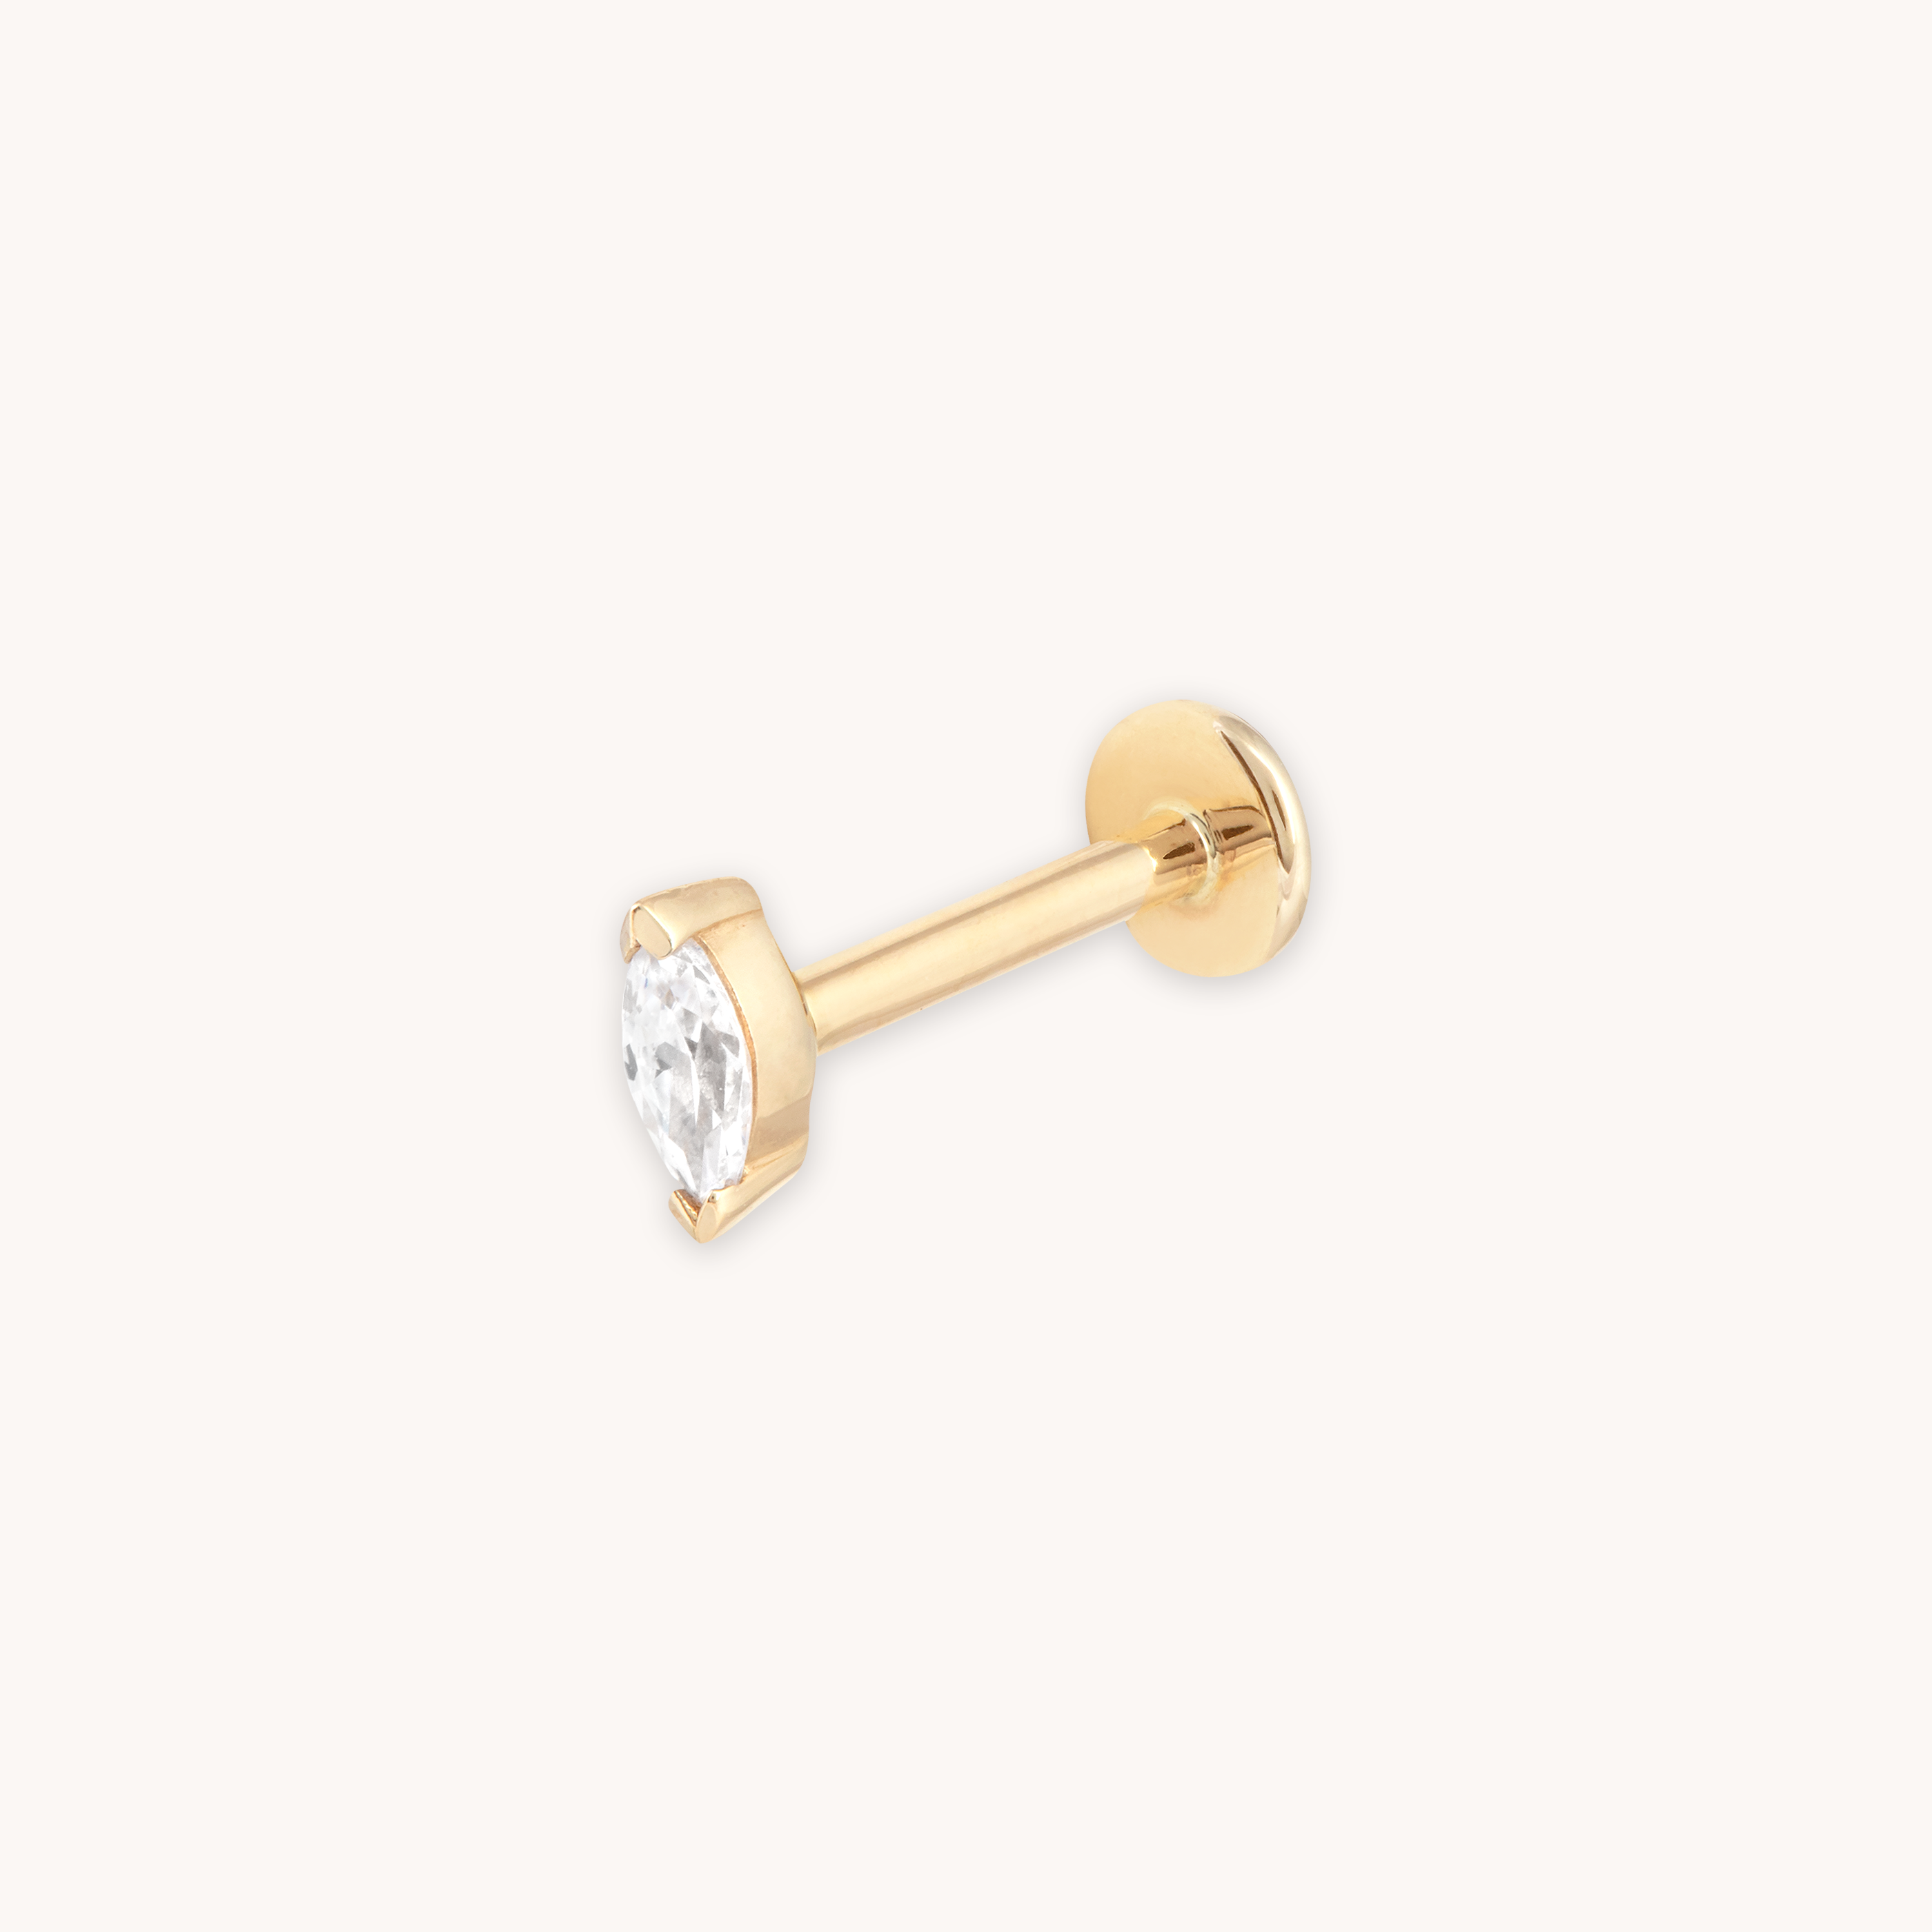 Topaz Marquise Piercing Stud 6mm in Solid Gold | Astrid & Miyu Earrings